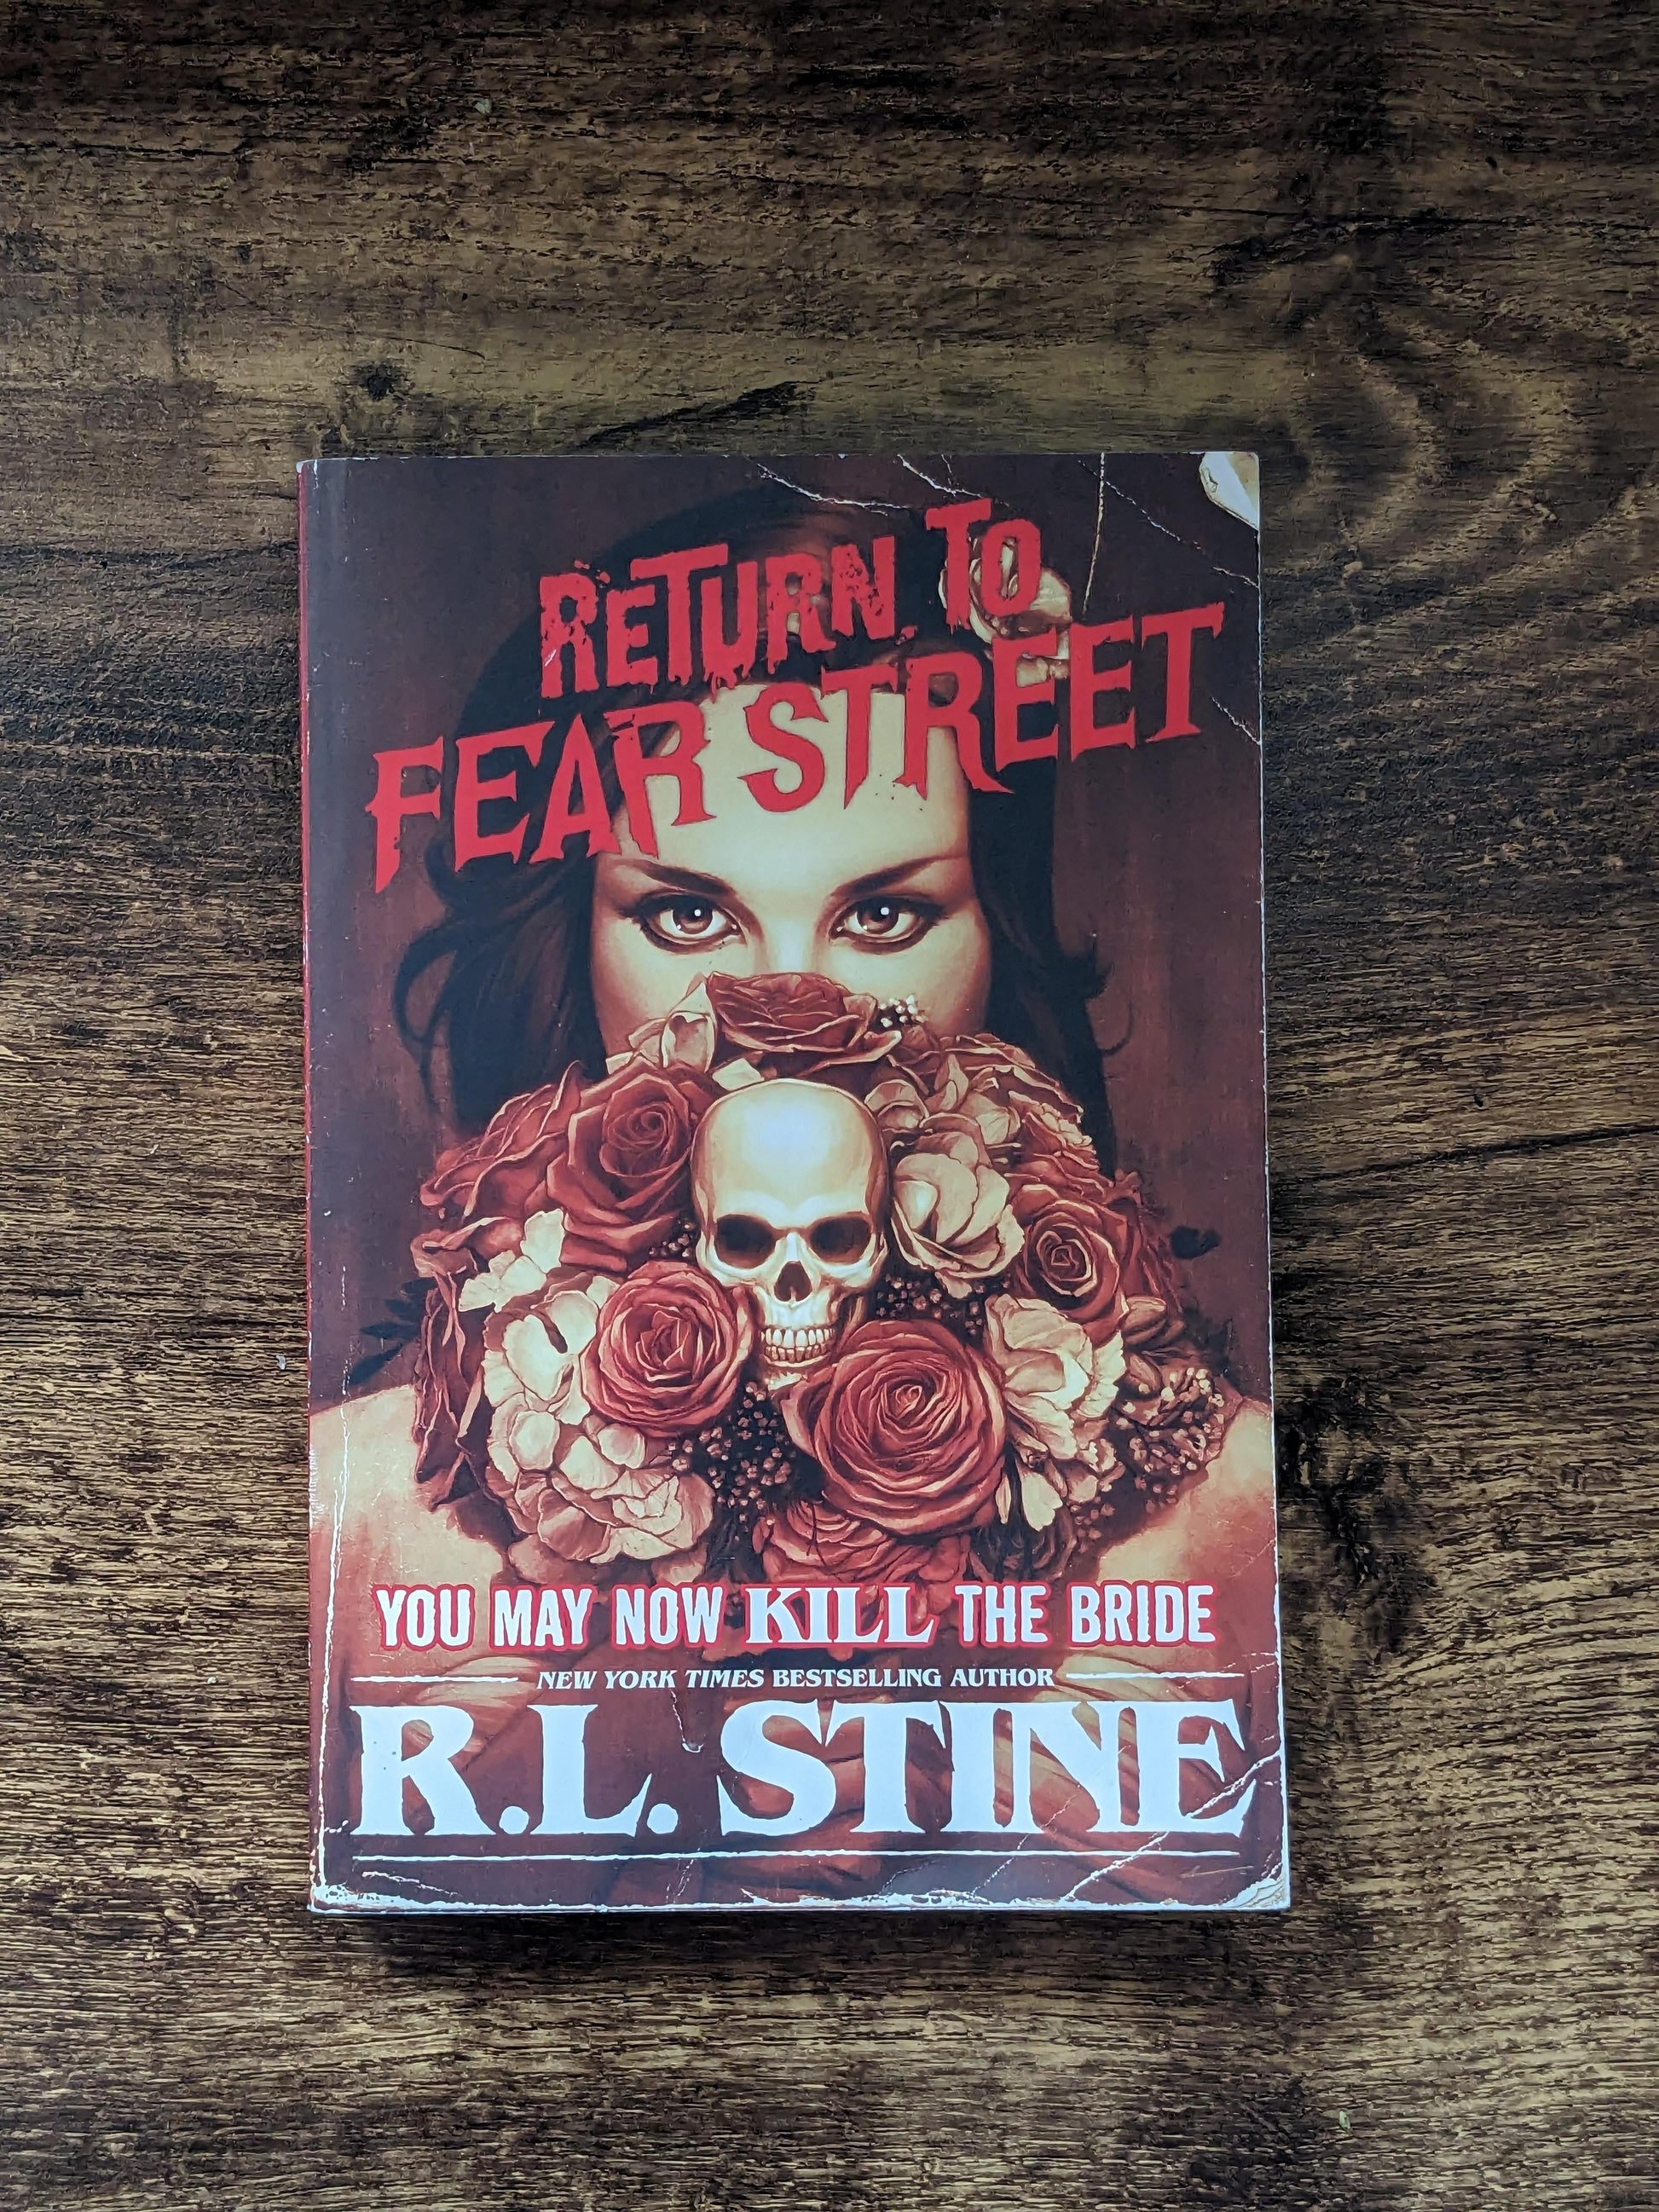 You May Now Kill the Bride (Return to Fear Street #1) R.L. Stine - Asylum Books